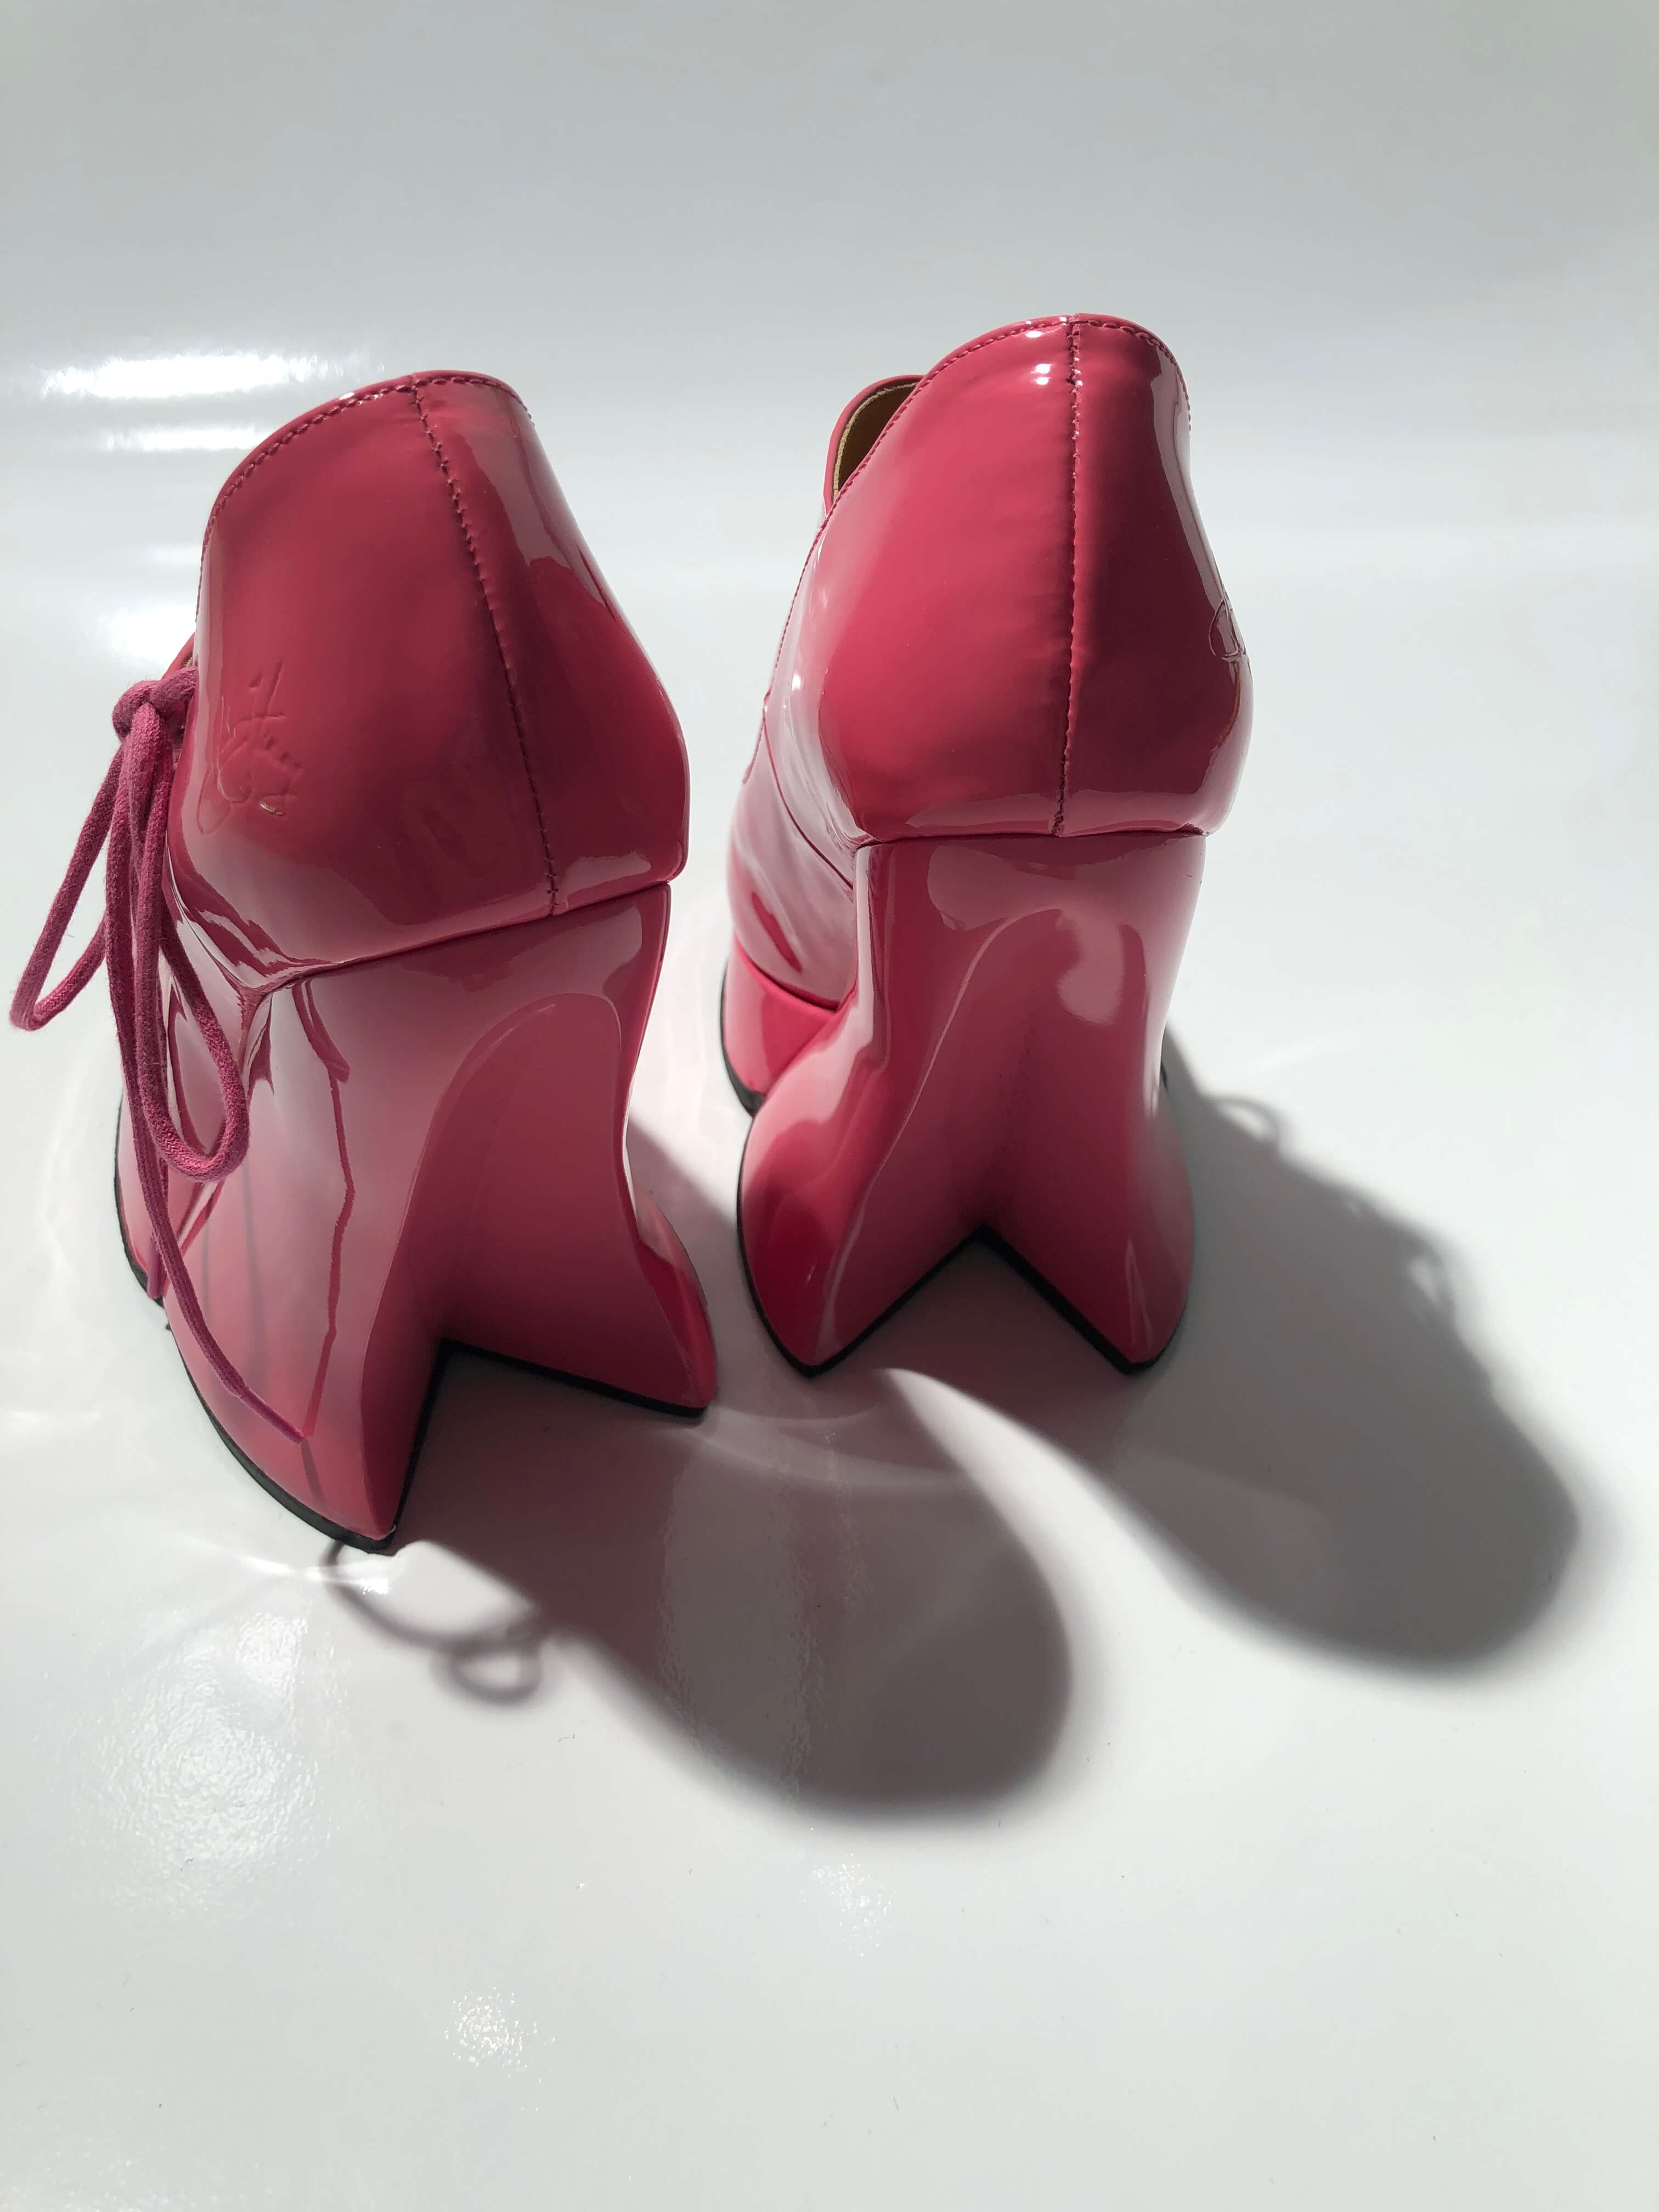 John Fluevog pink pig heels